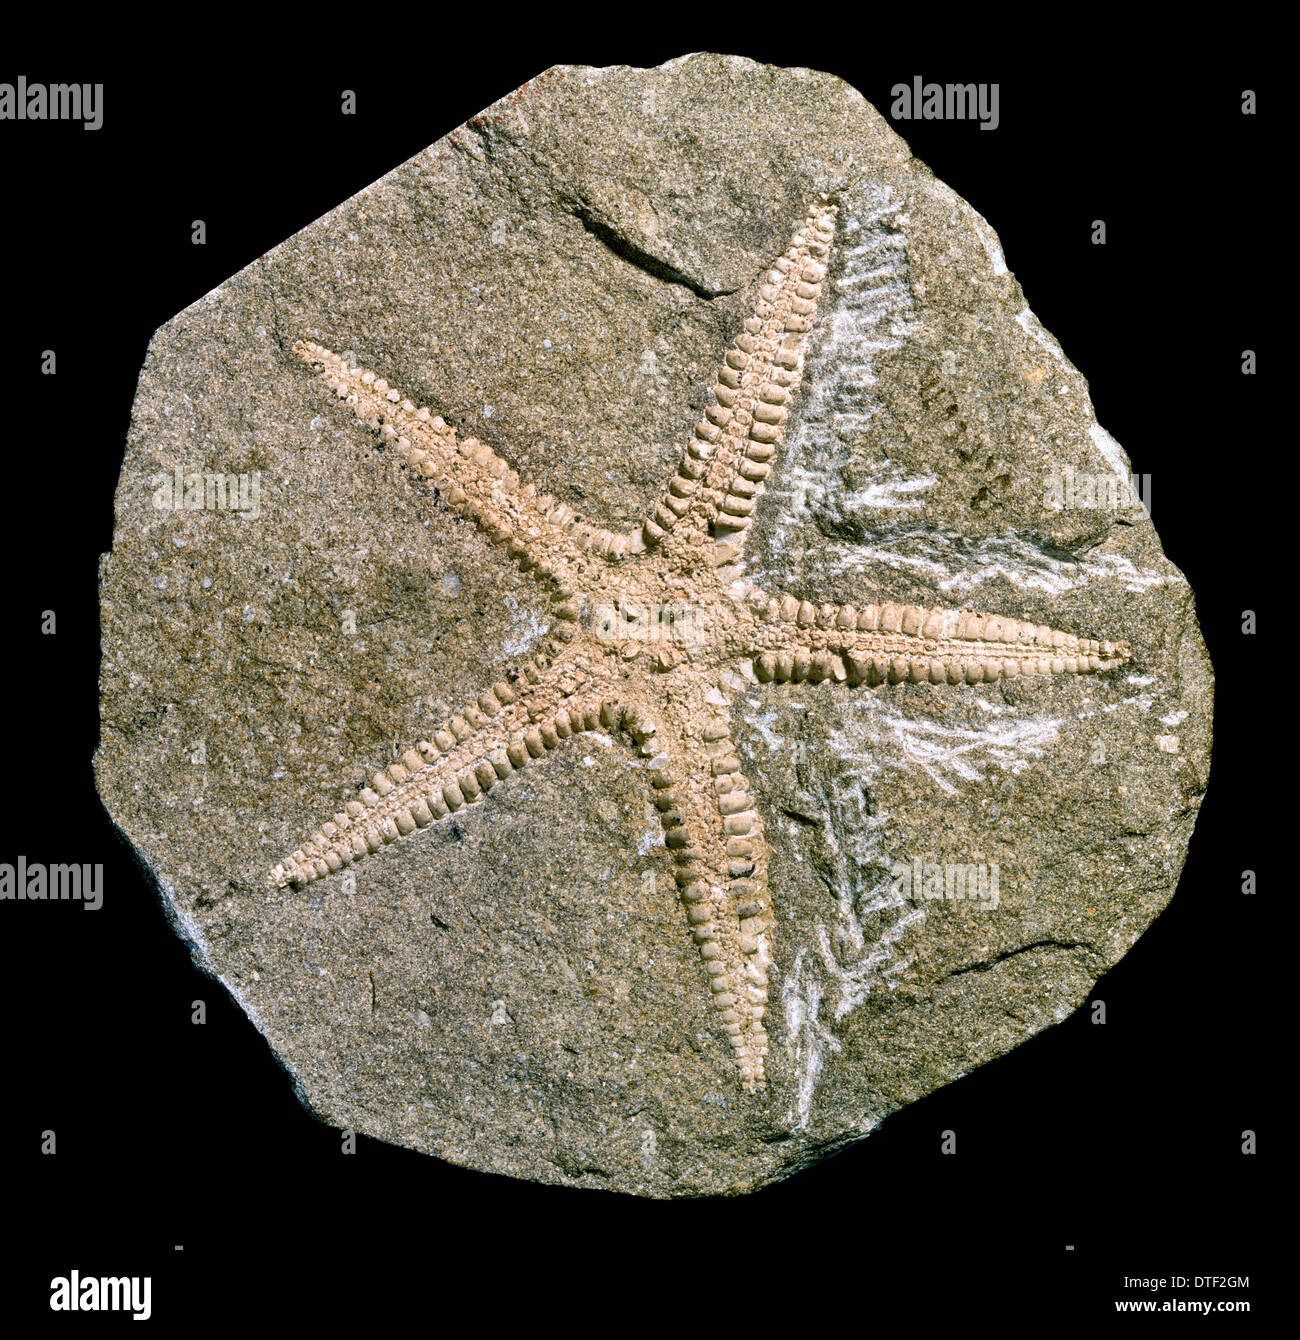 Archastropecten cotteswoldiae, starfish Stock Photo